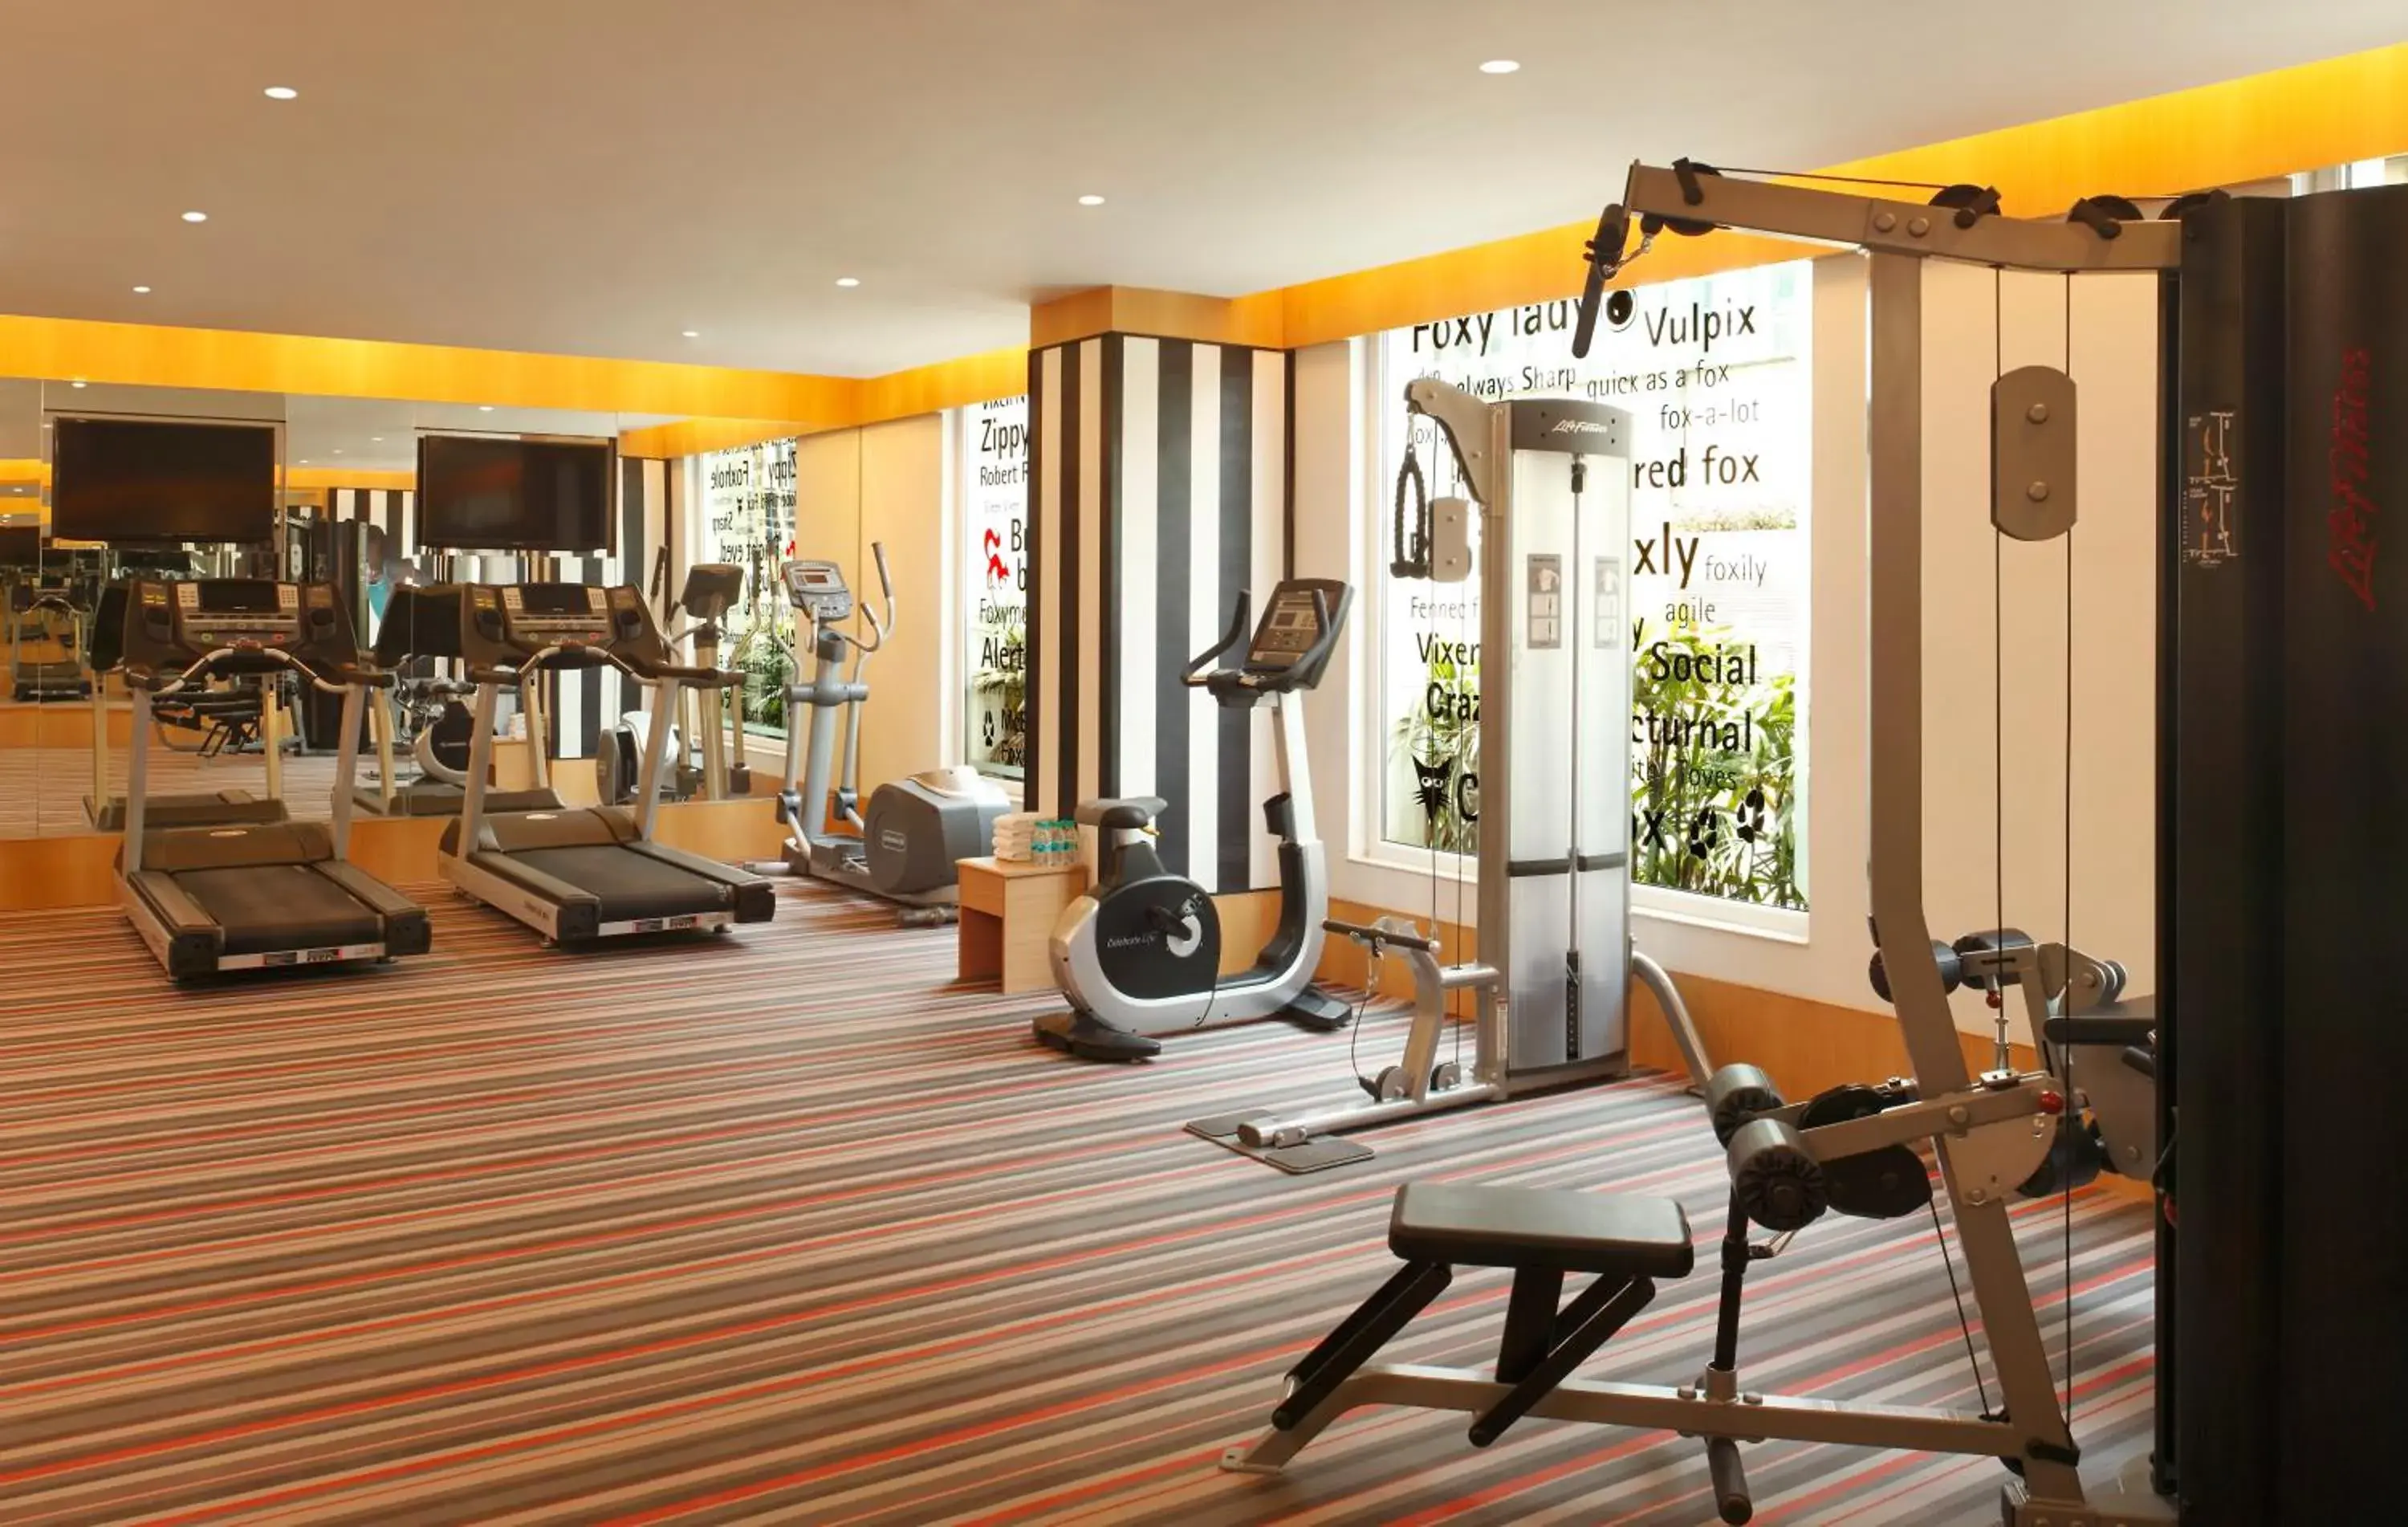 Fitness centre/facilities, Fitness Center/Facilities in Red Fox Hotel, East Delhi